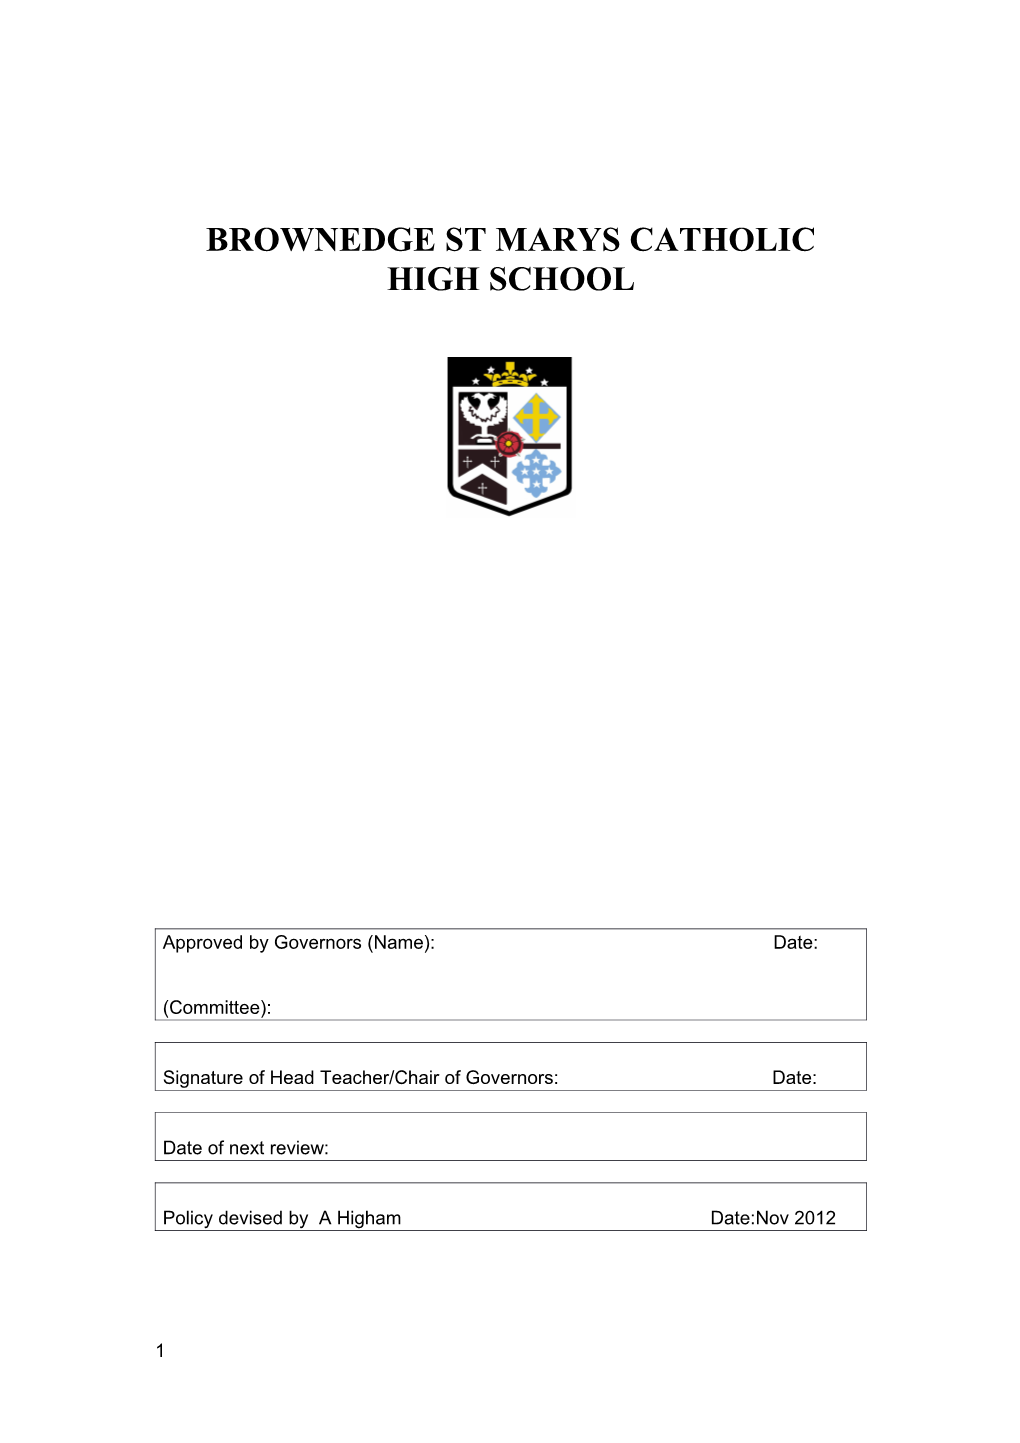 Brownedge St Marys Catholic High School